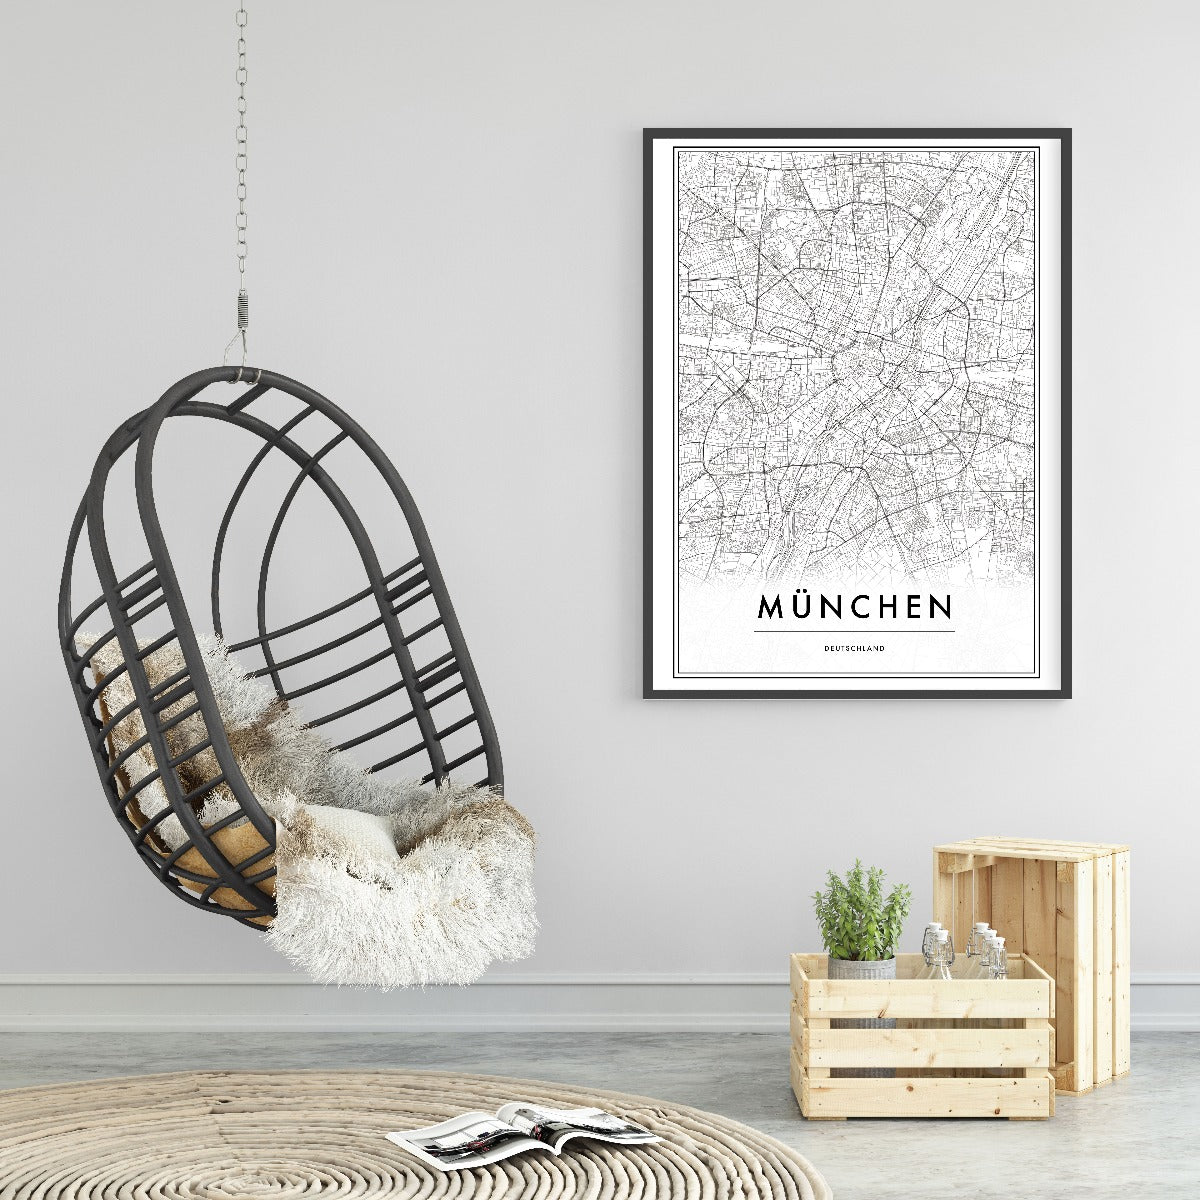  München Duitsland Kaart Posters